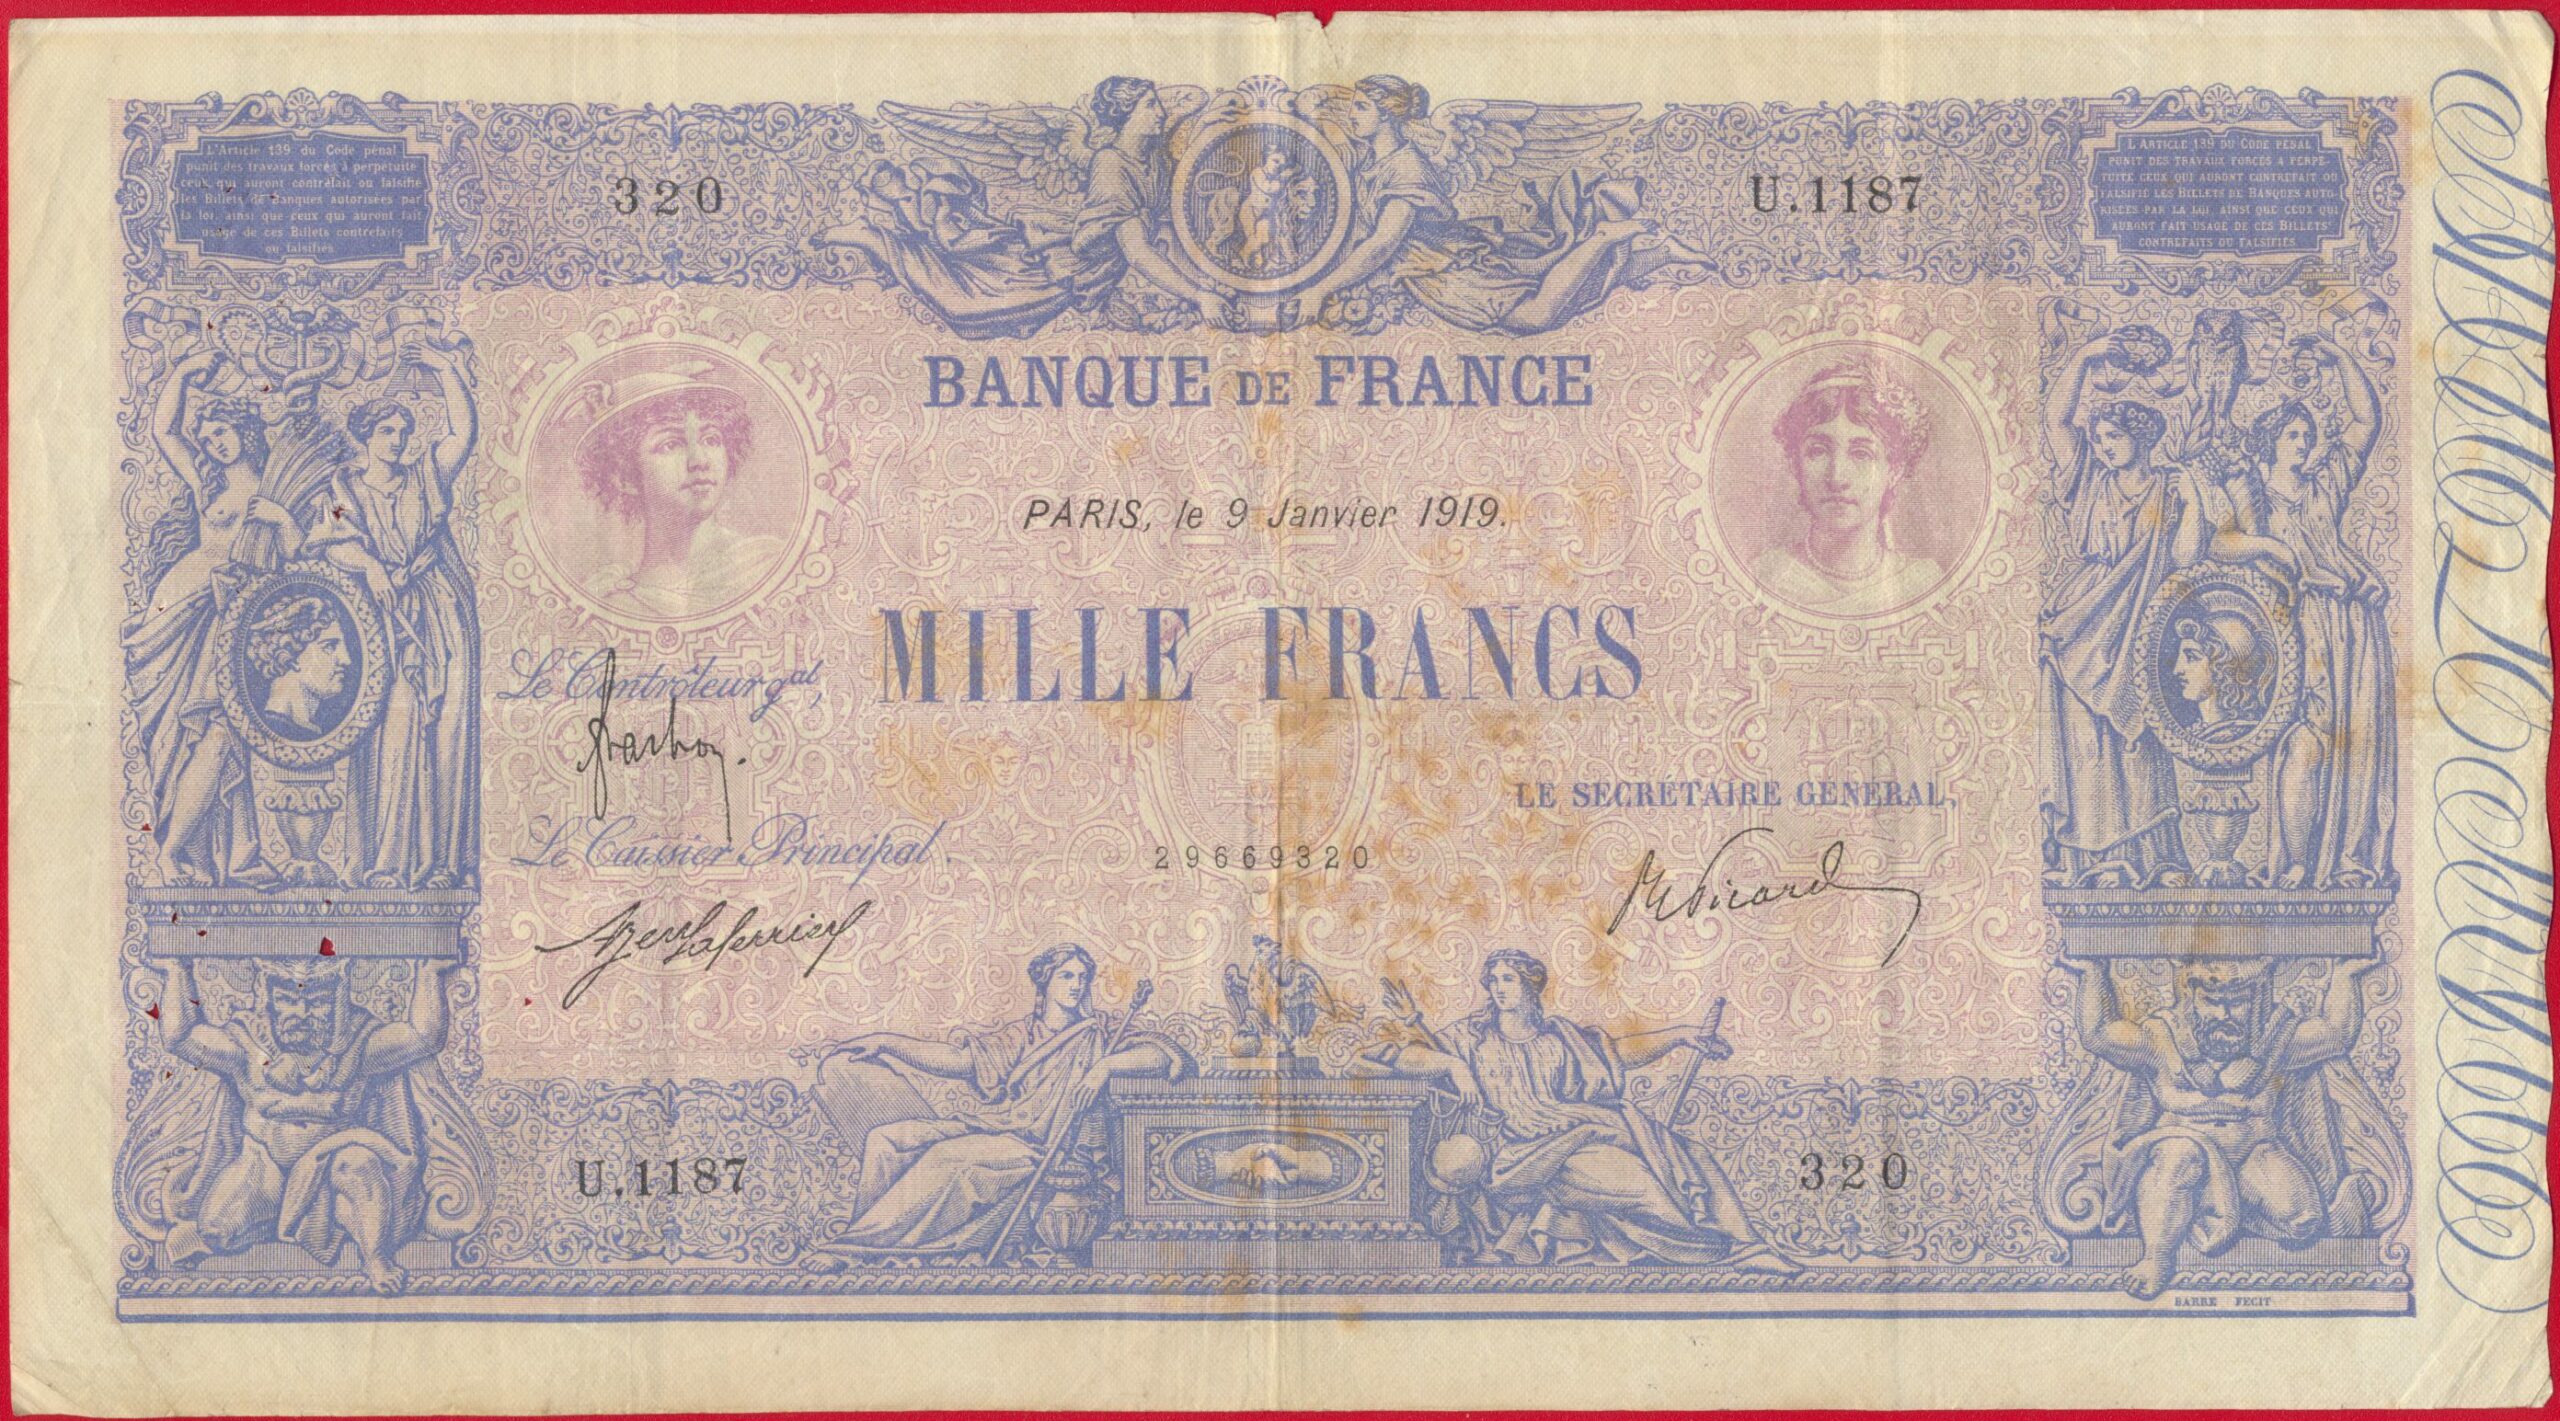 1000-francs-9-1-1919-bleu-rose-9320